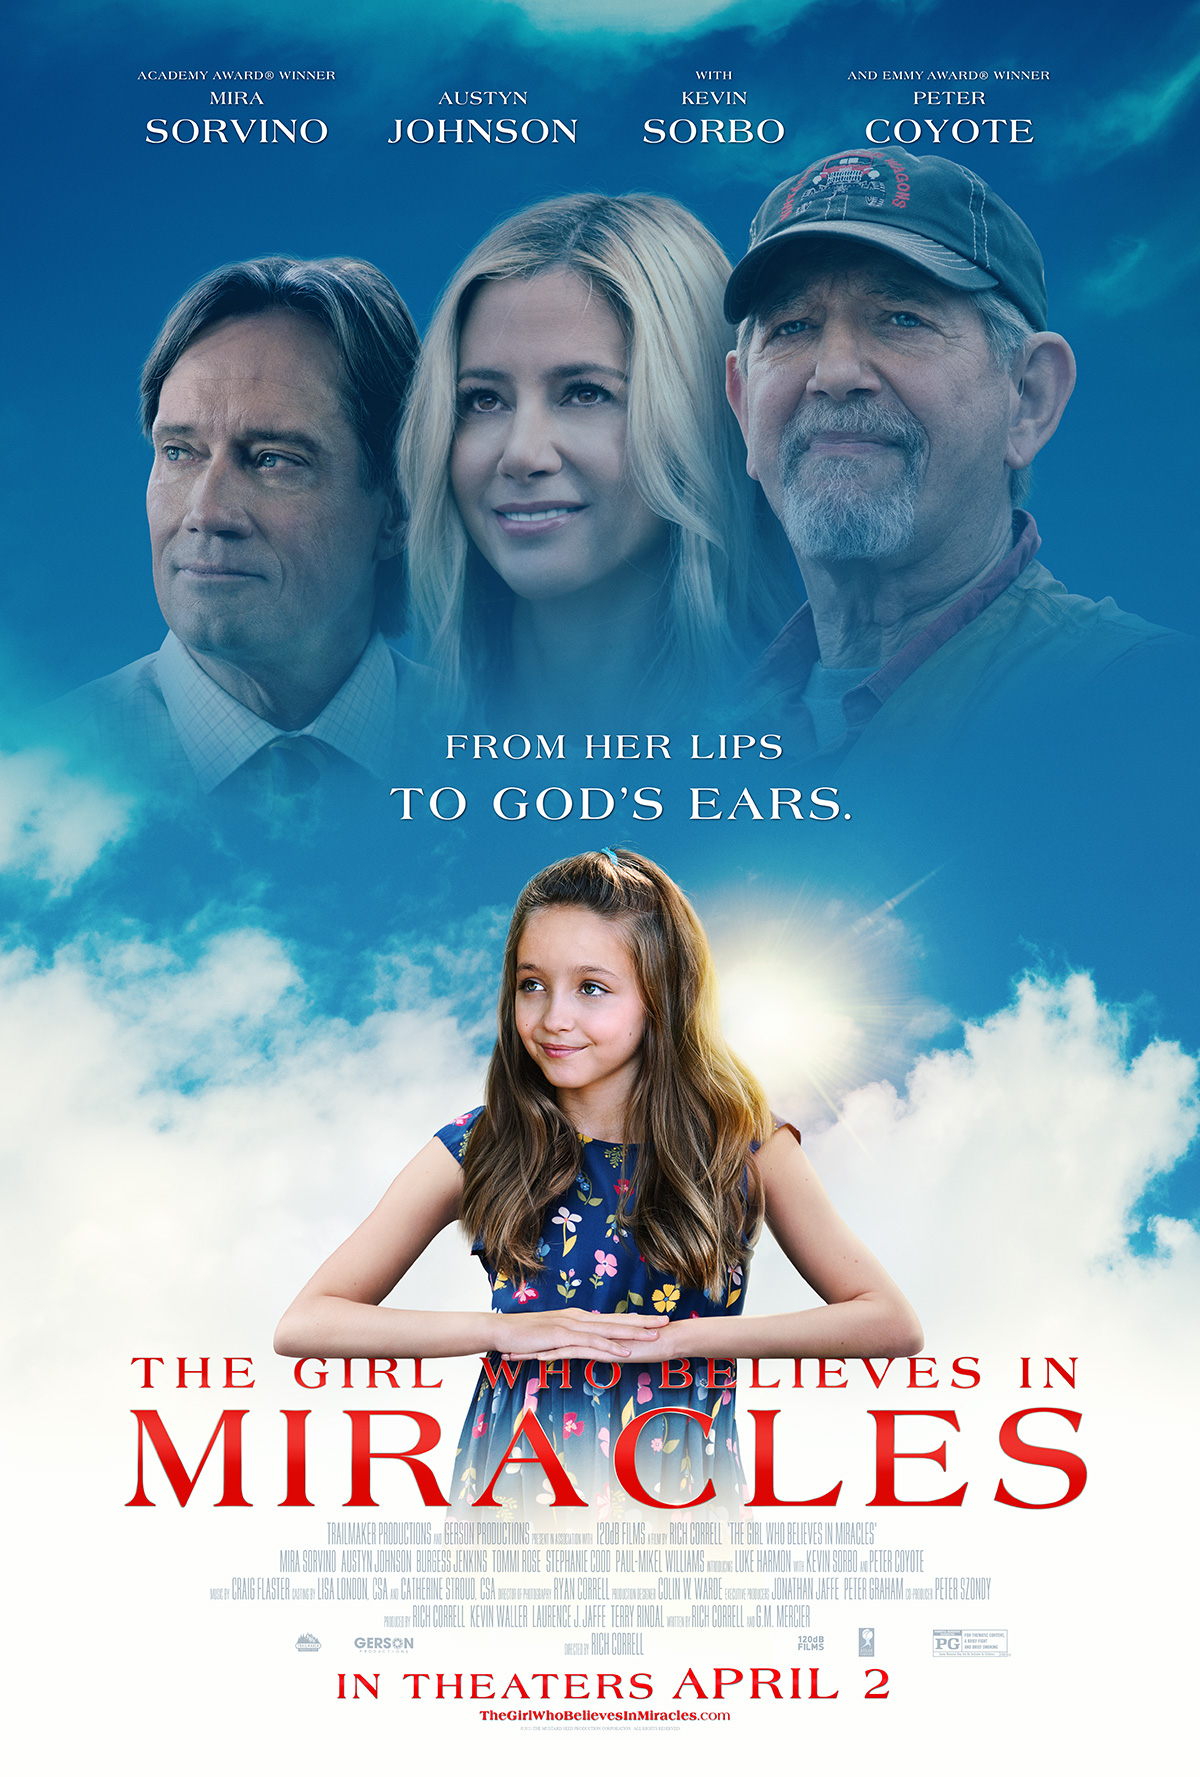 Stiahni si Filmy CZ/SK dabing Dievca, ktore veri v zazraky / The Girl Who Believes in Miracles (2021)(SK)[1080p] = CSFD 42%